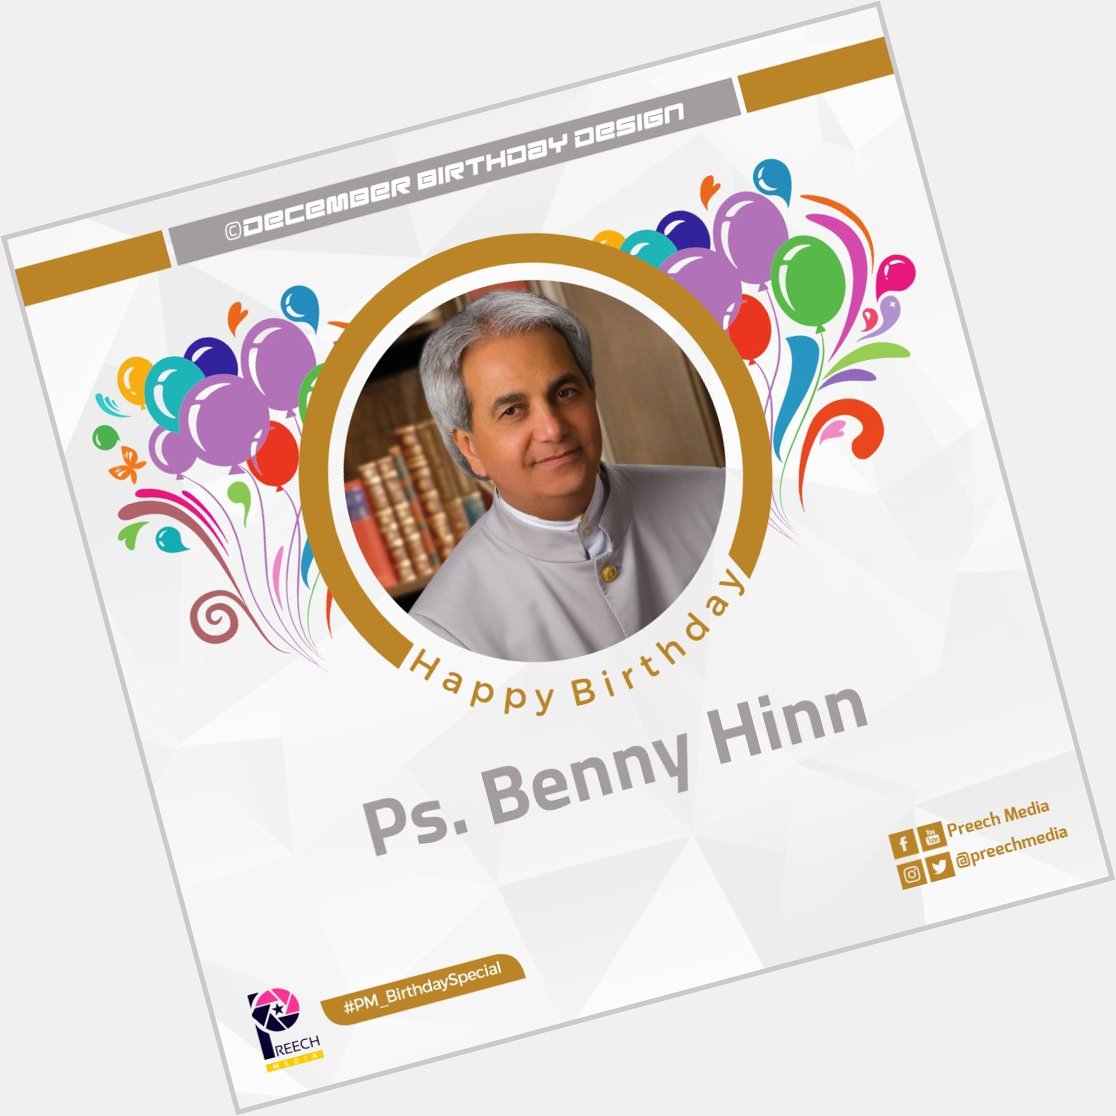 Happy birthday Ps. Benny Hinn  